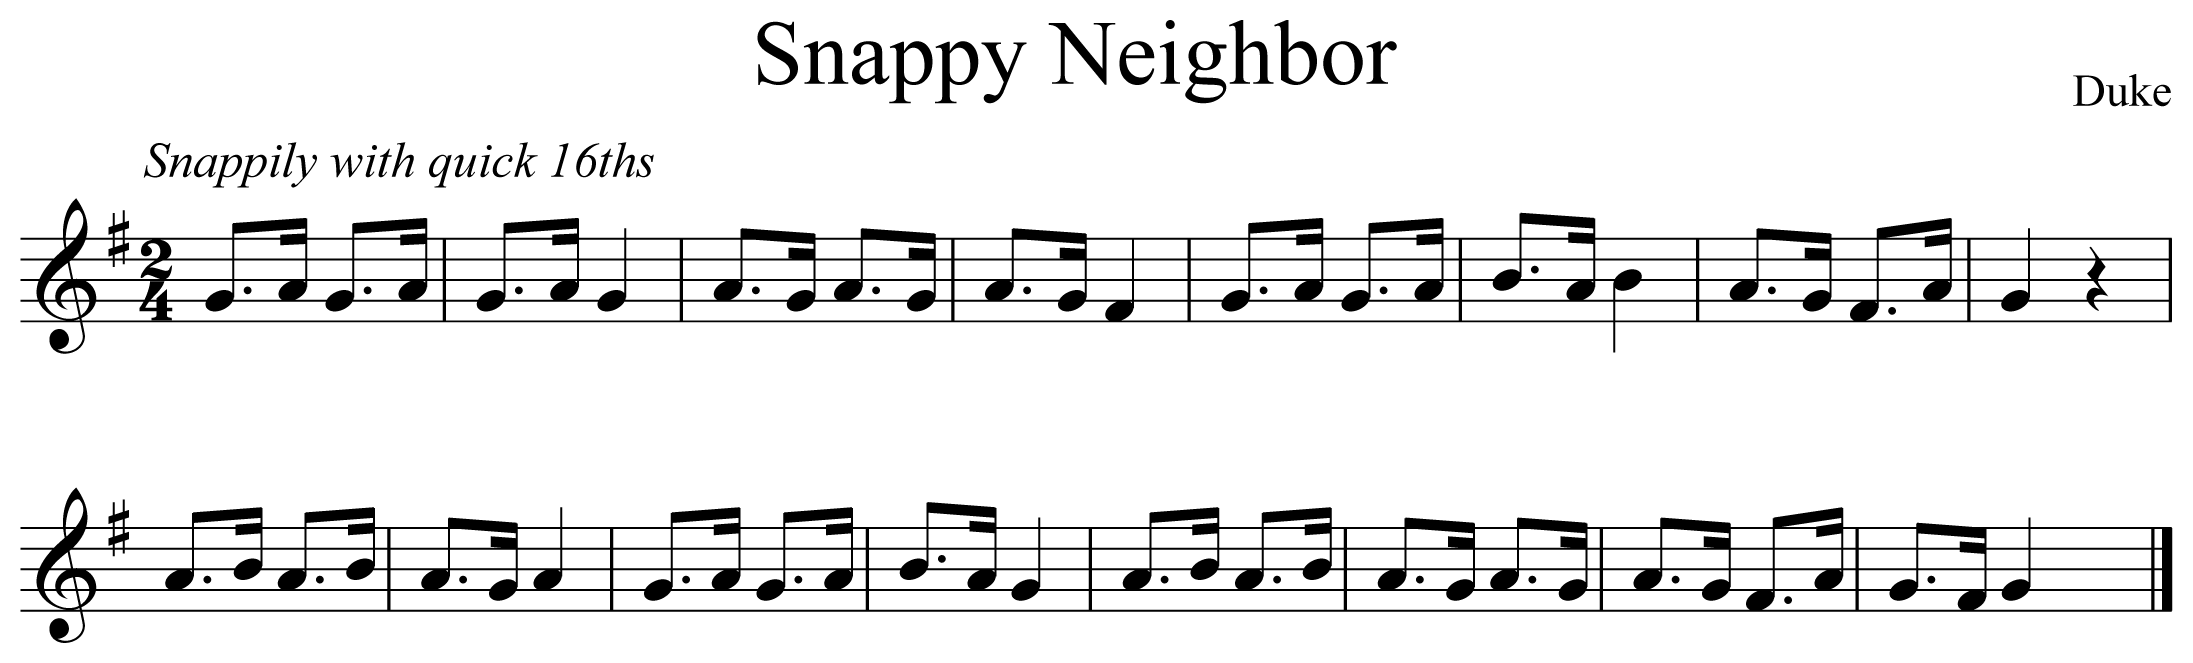 Snappy Neighbor Music Notation Trumpet